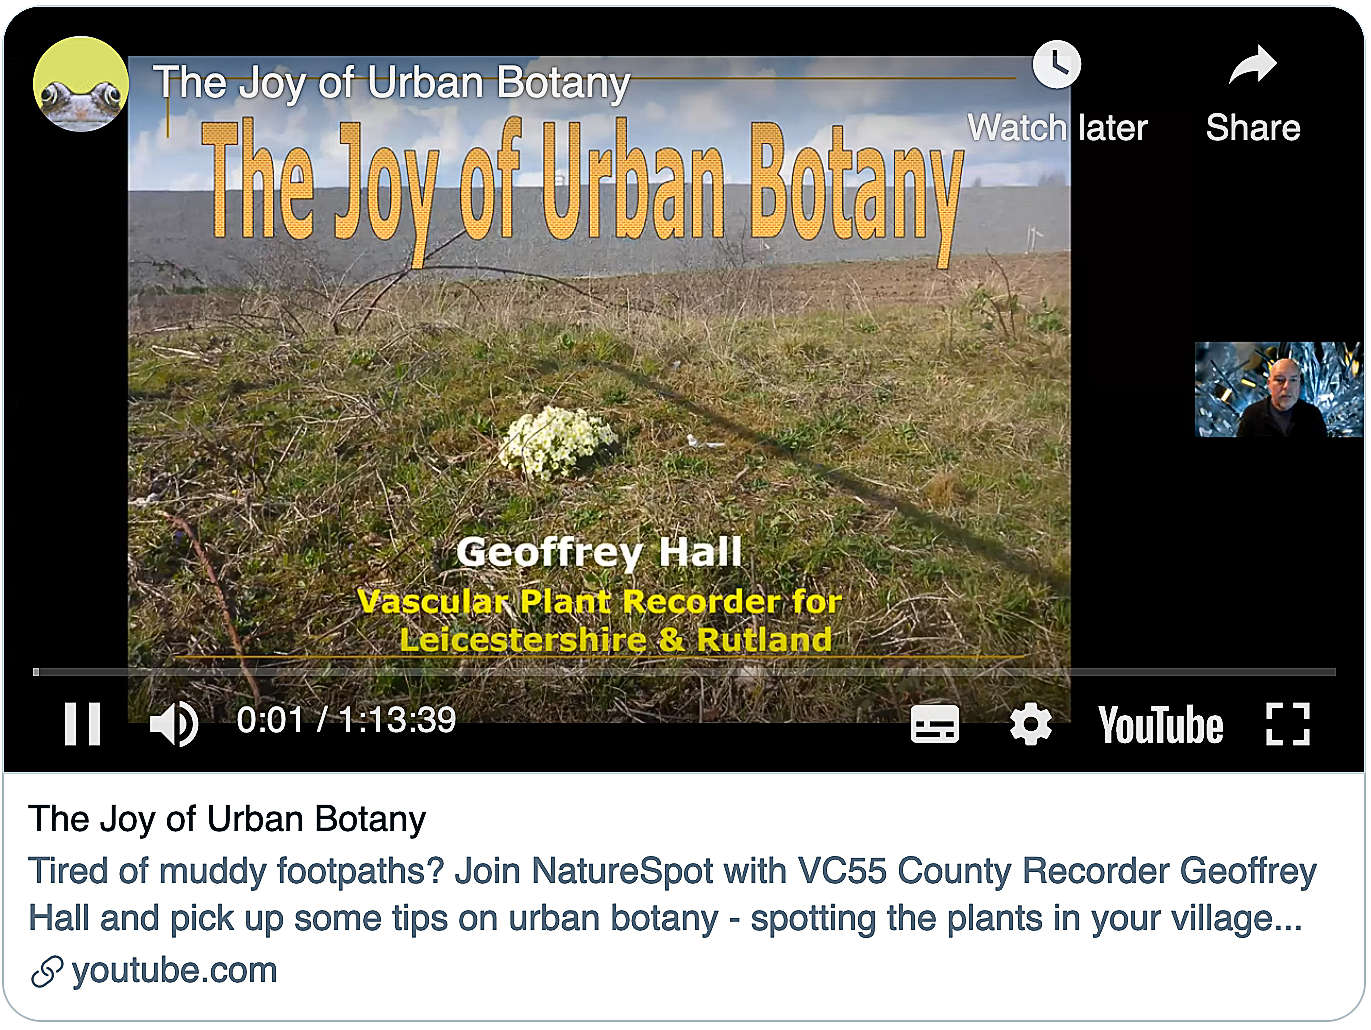 The Joy of Urban Botany